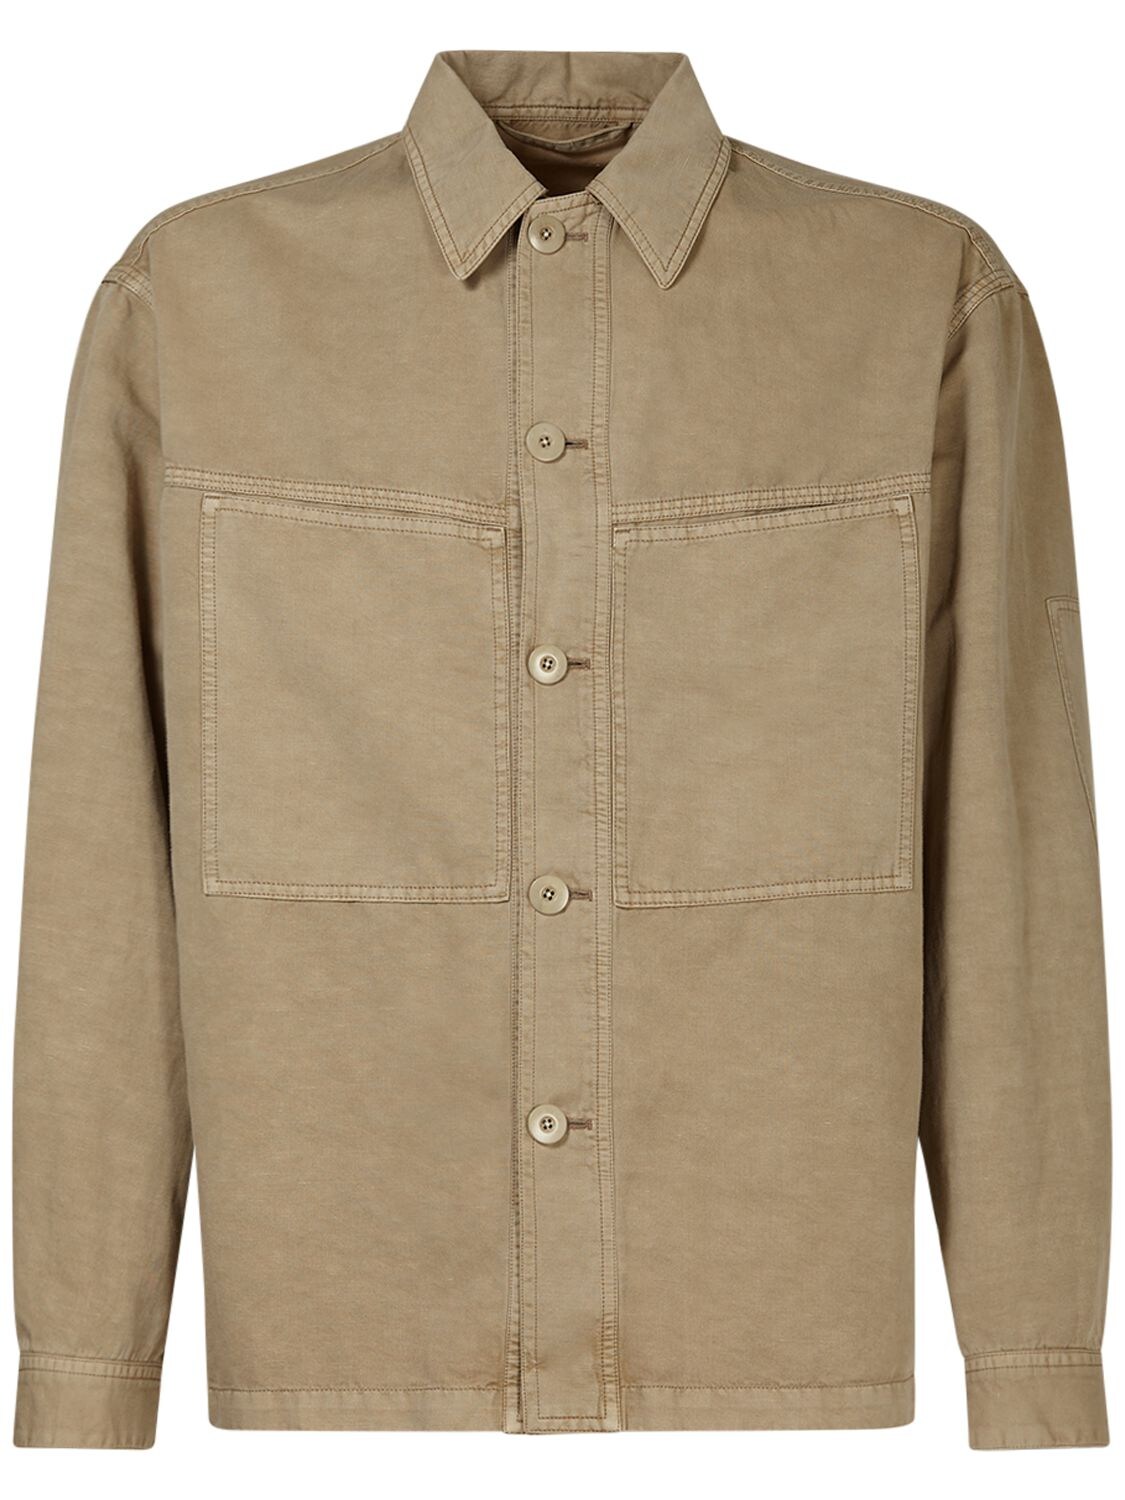 Cotton & Linen Overshirt Jacket